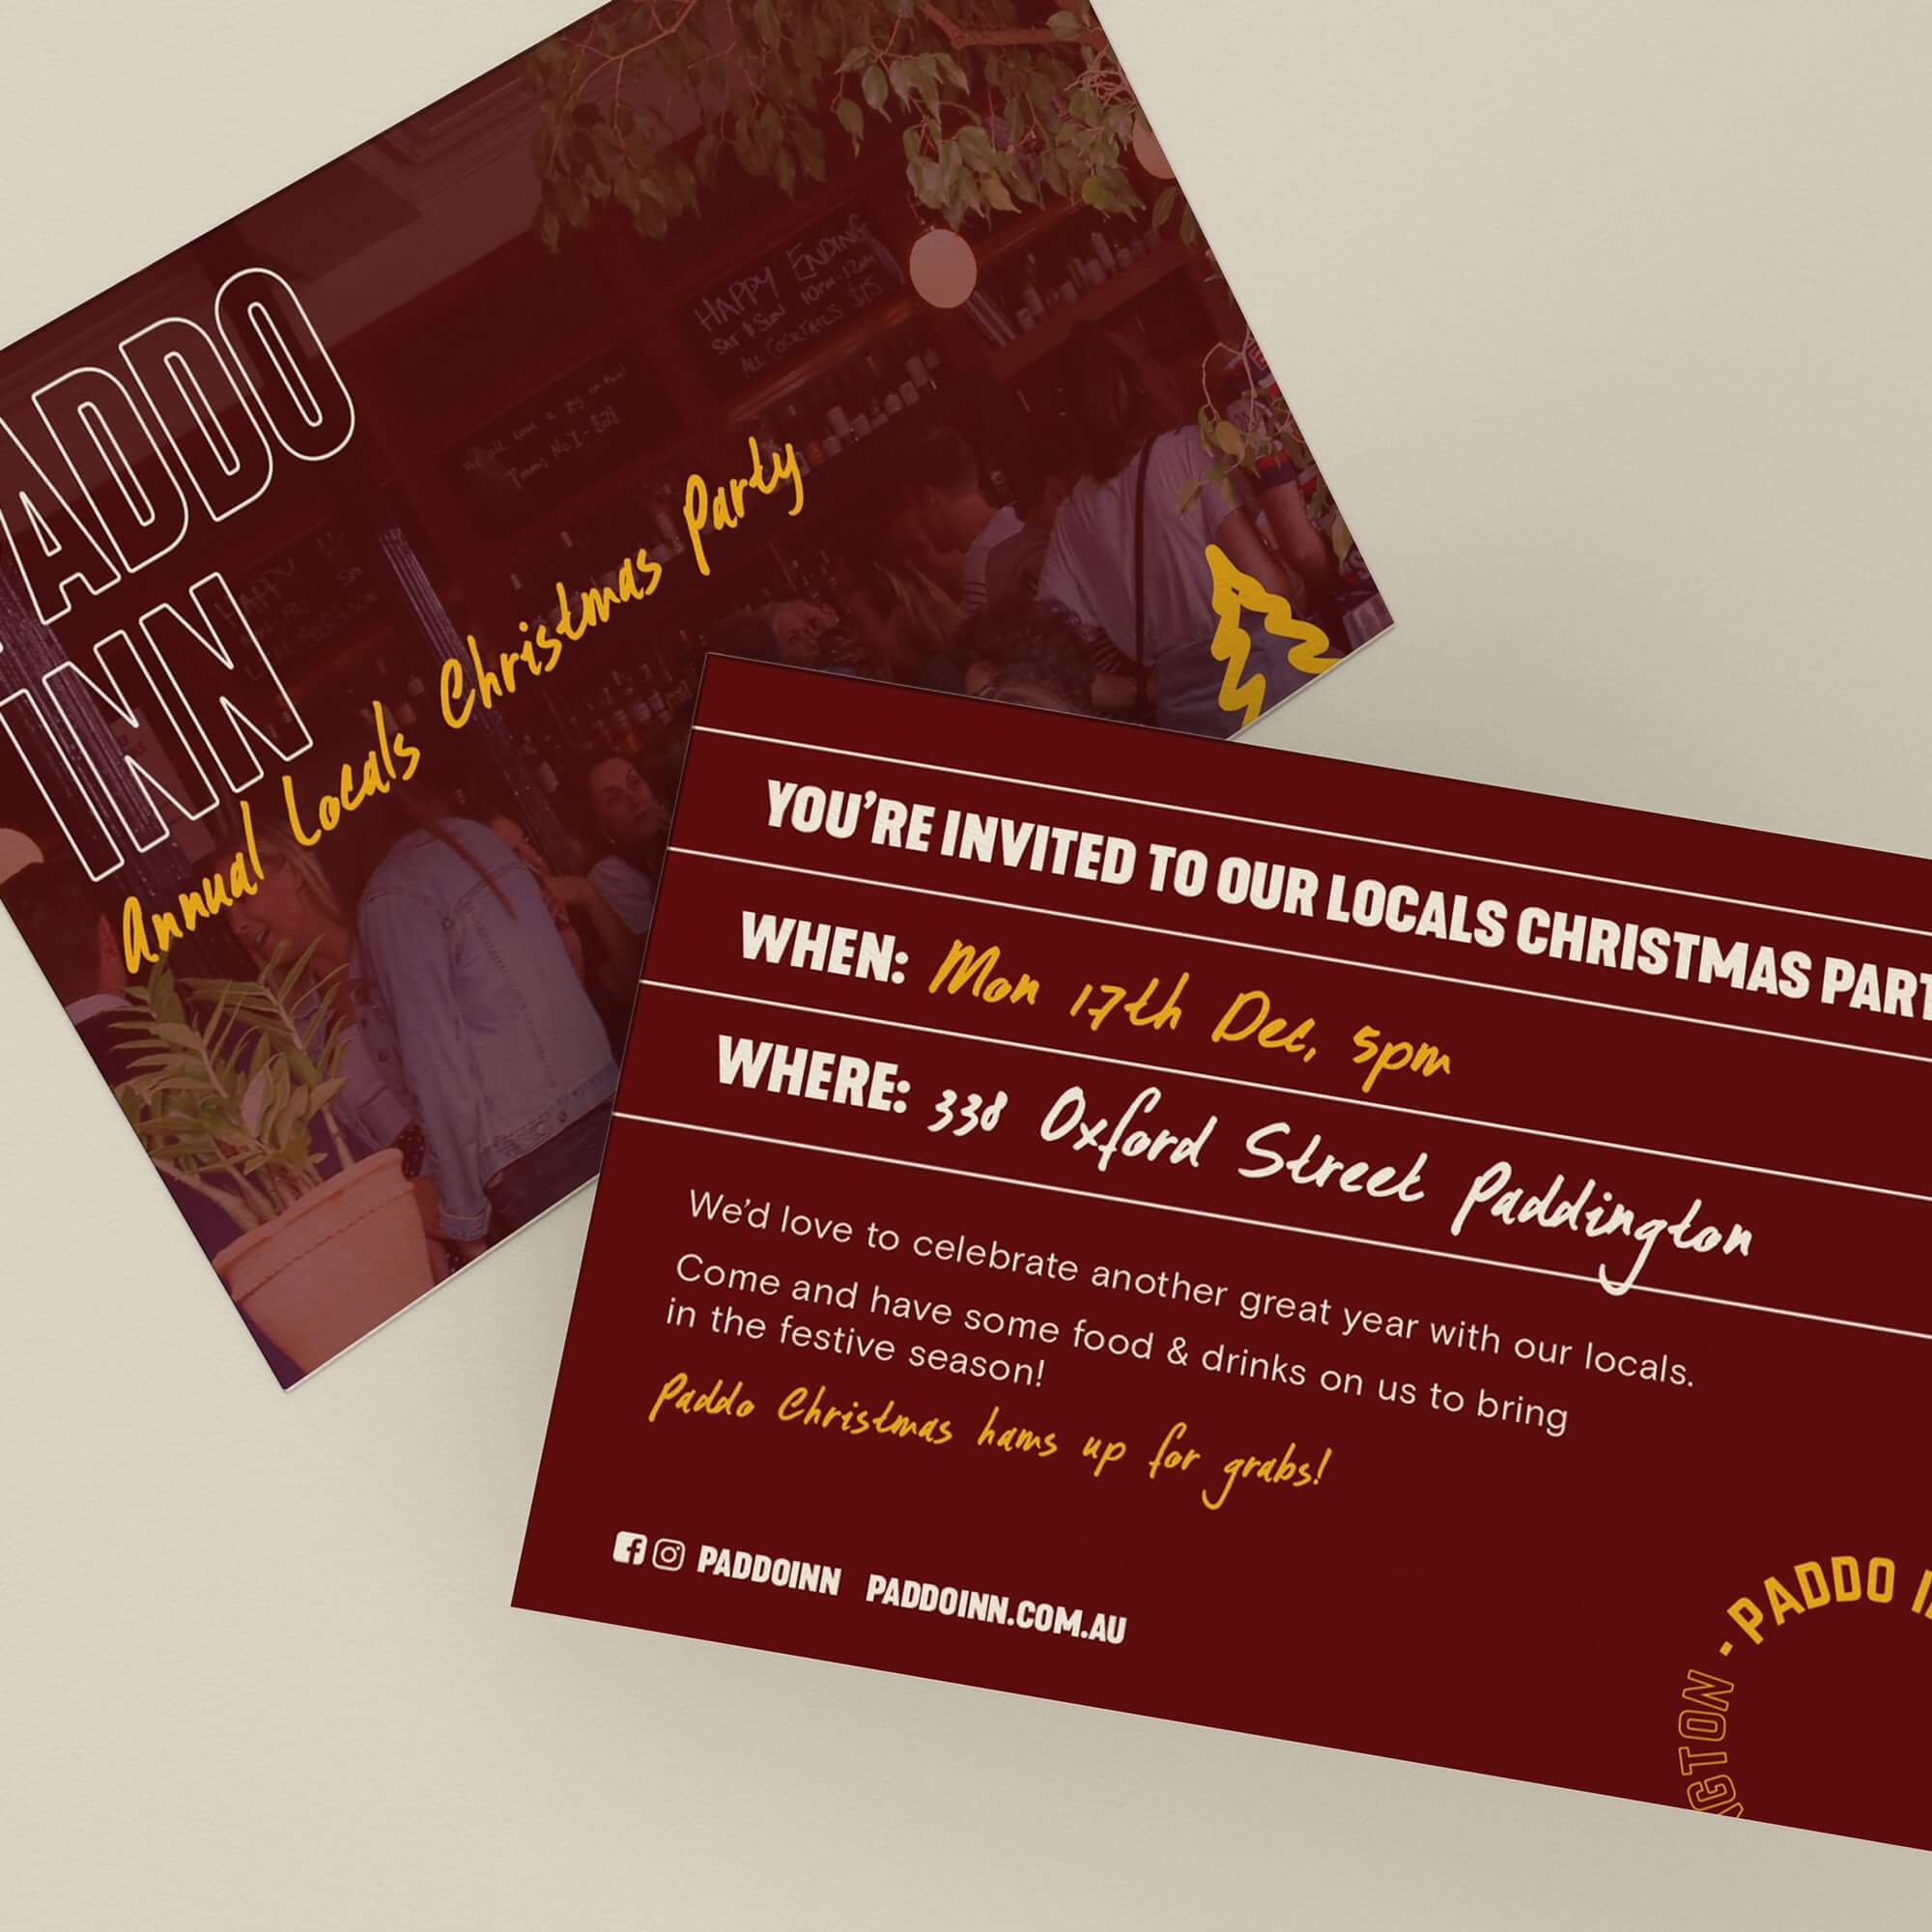 paddo inn paddington annual christmas party invitation design by sydney design social 